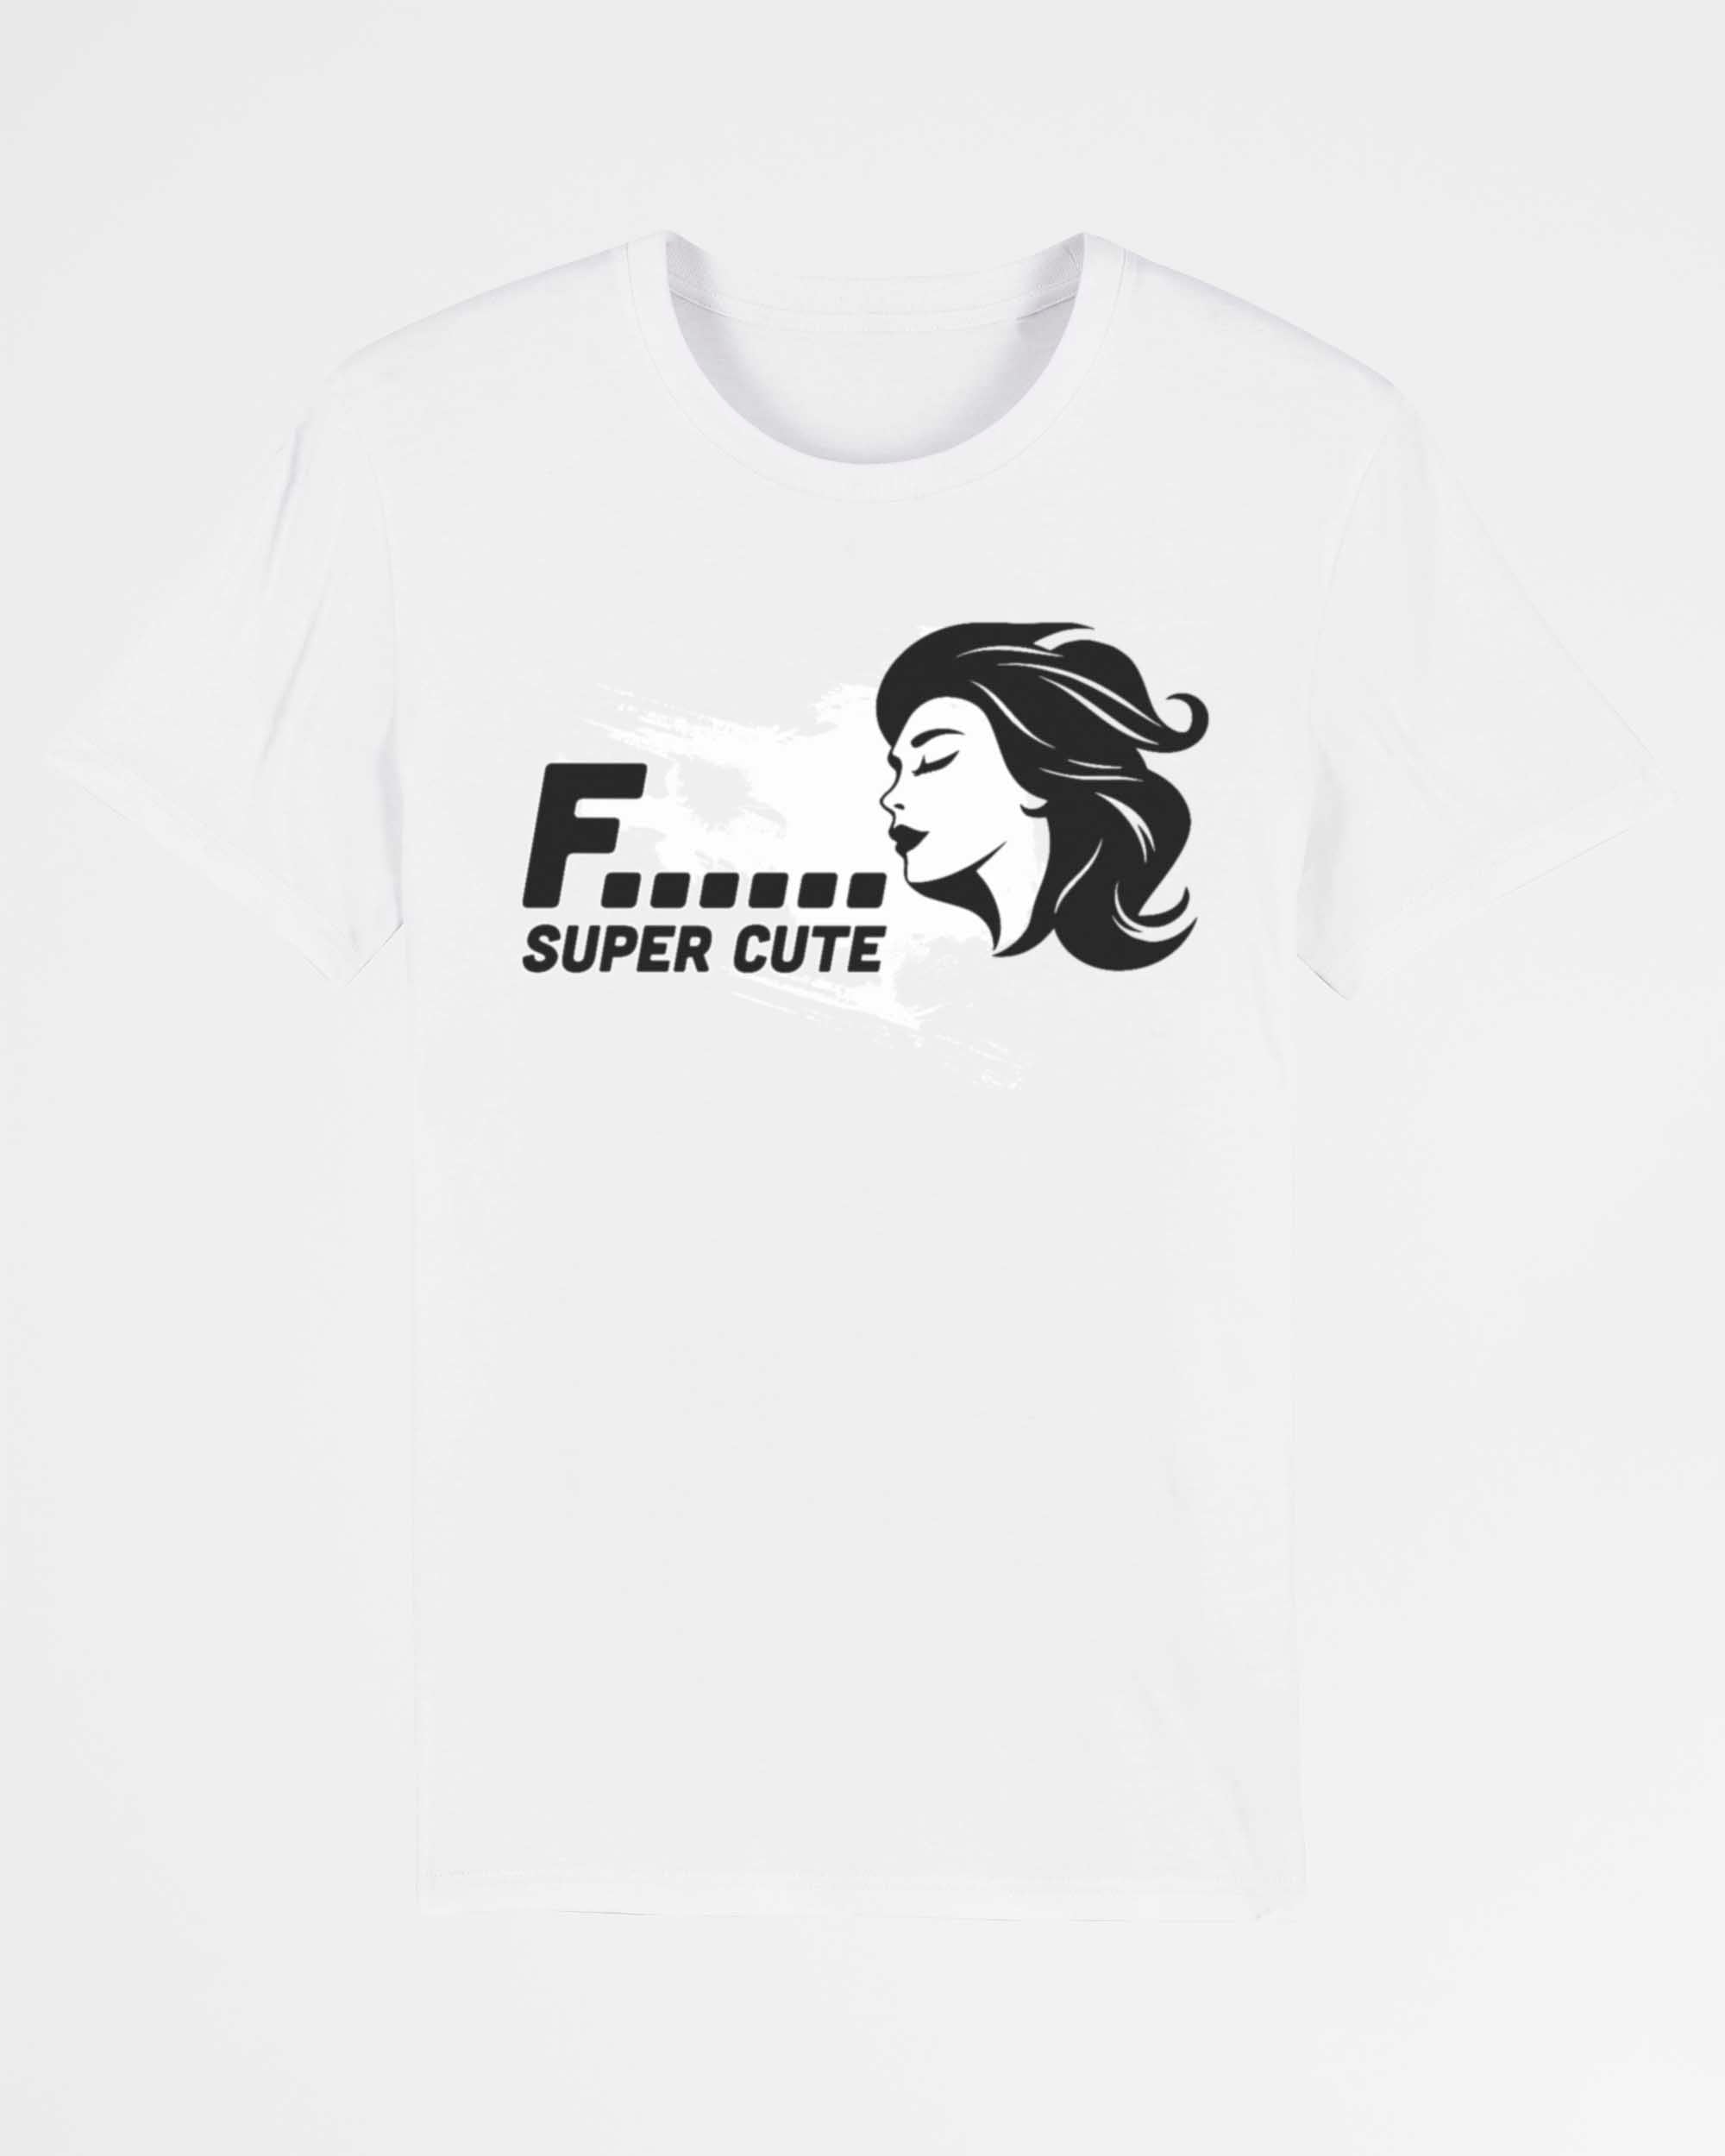 Super Cute | 3-Style T-Shirt